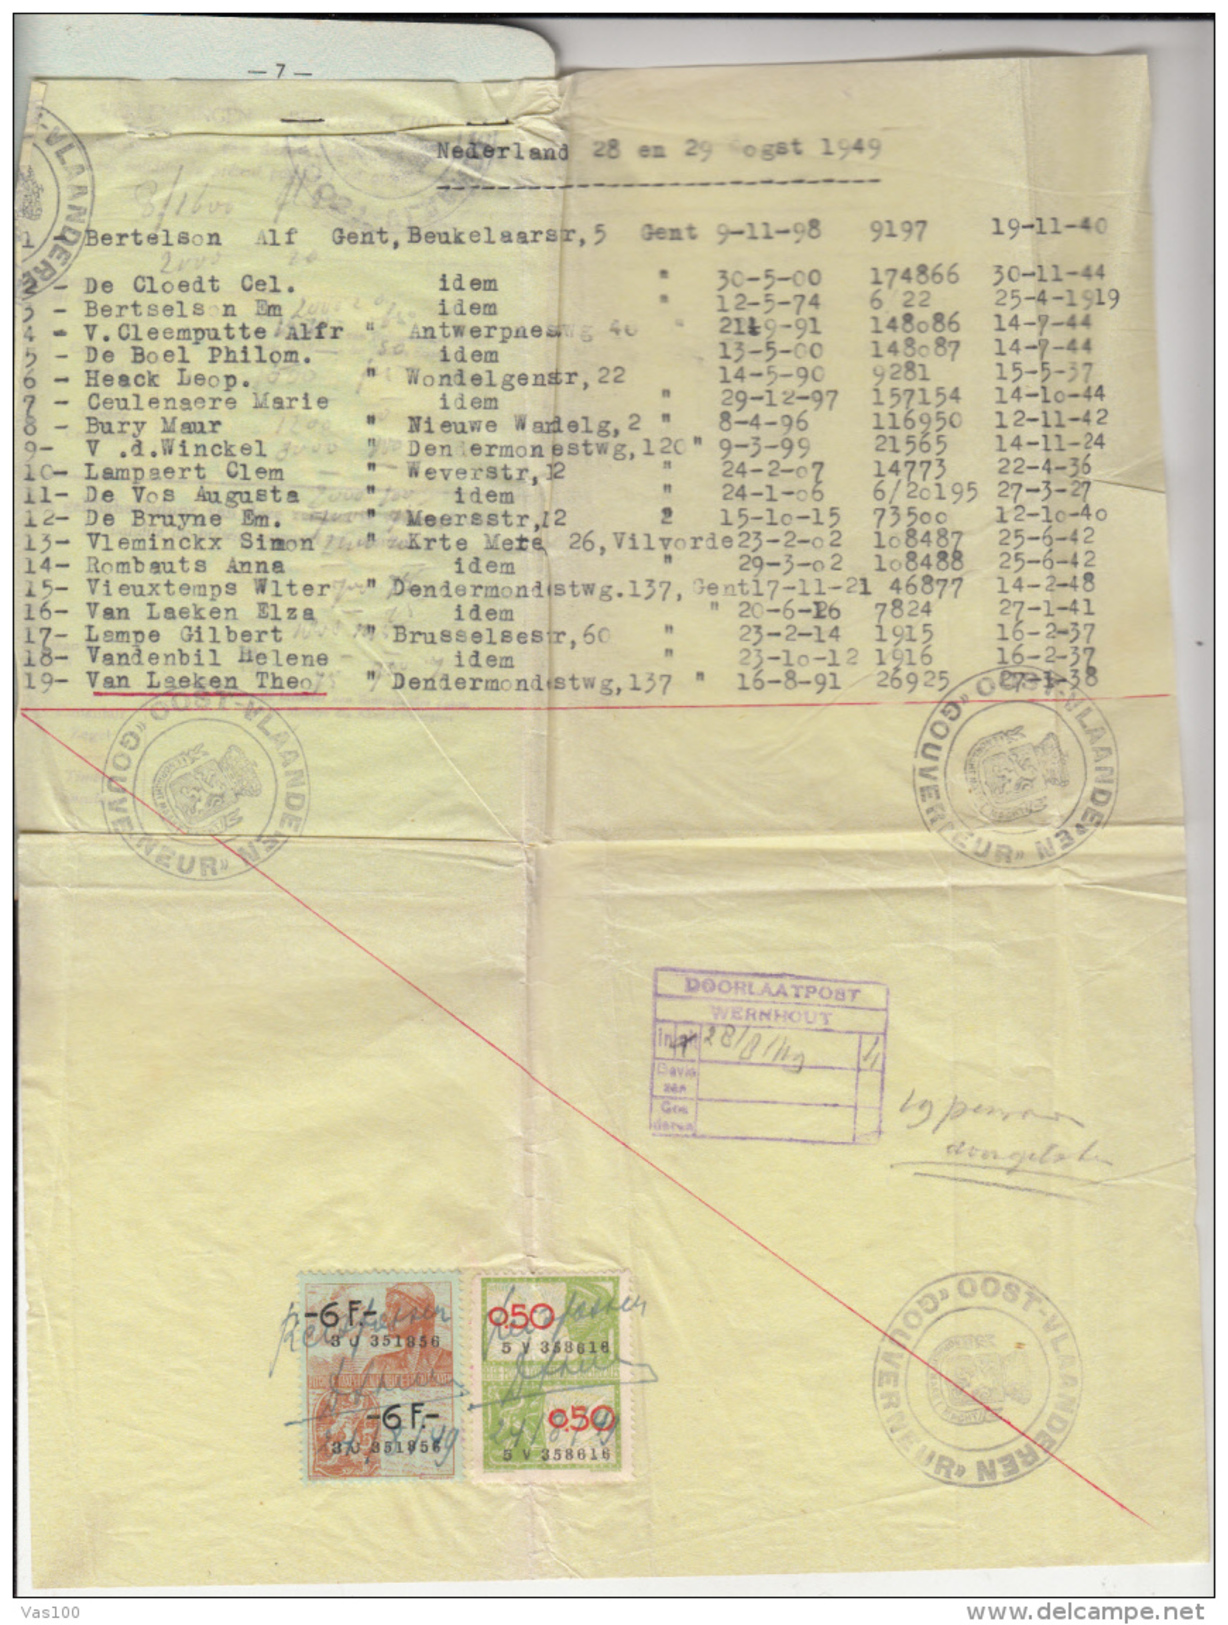 PASSPORT, PHOTO ID, REVENUE STAMP, 46 PAGES, 1949, BELGIUM - Documents Historiques